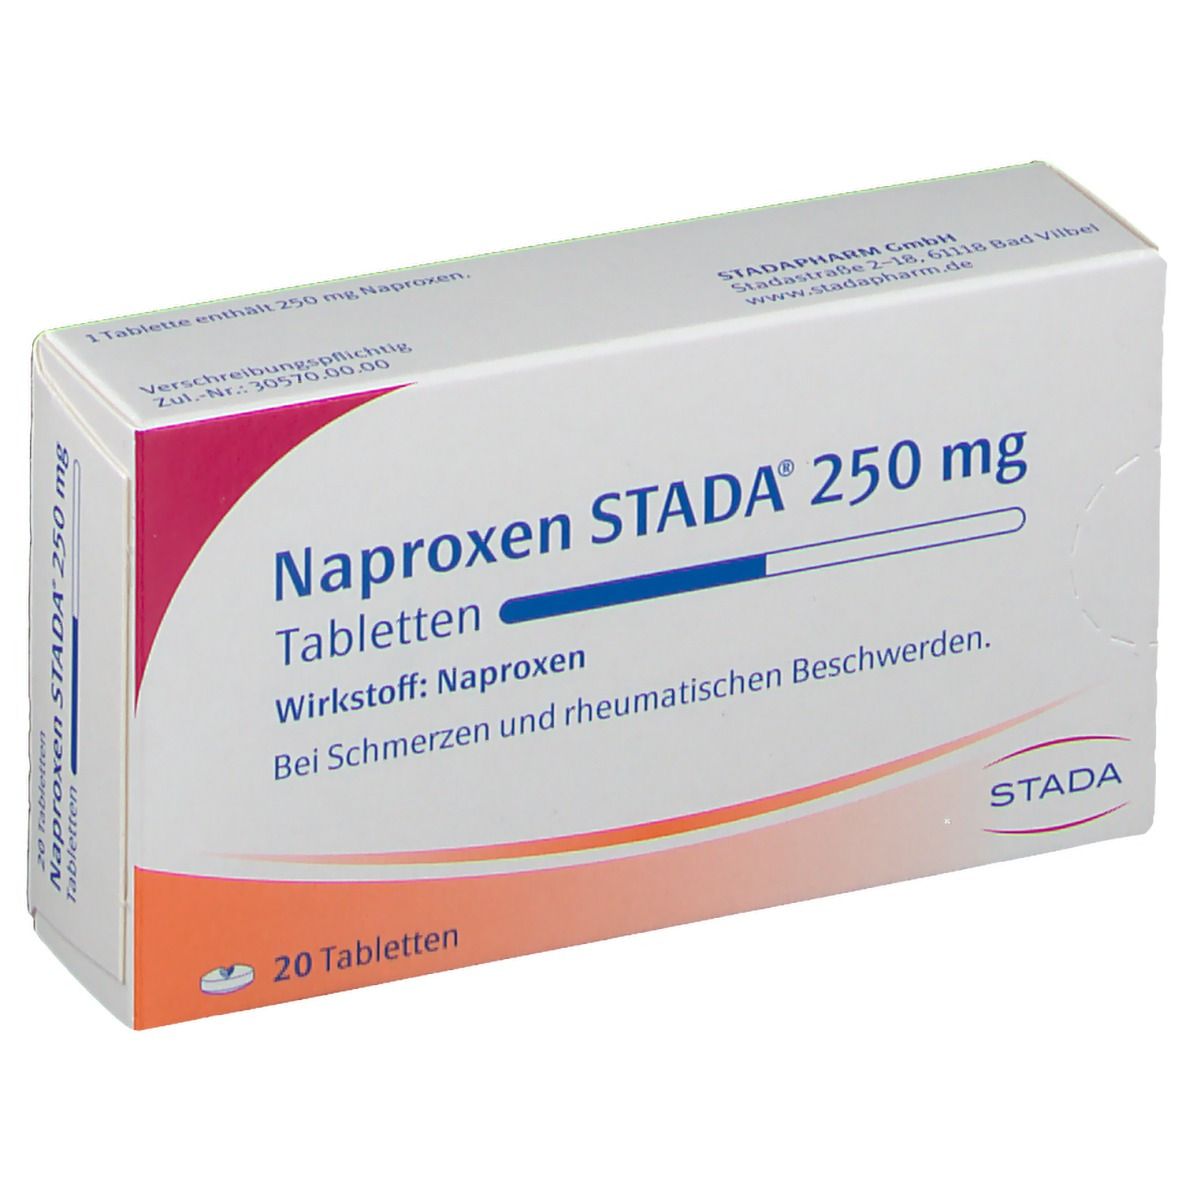 Naproxen STADA® 250 mg